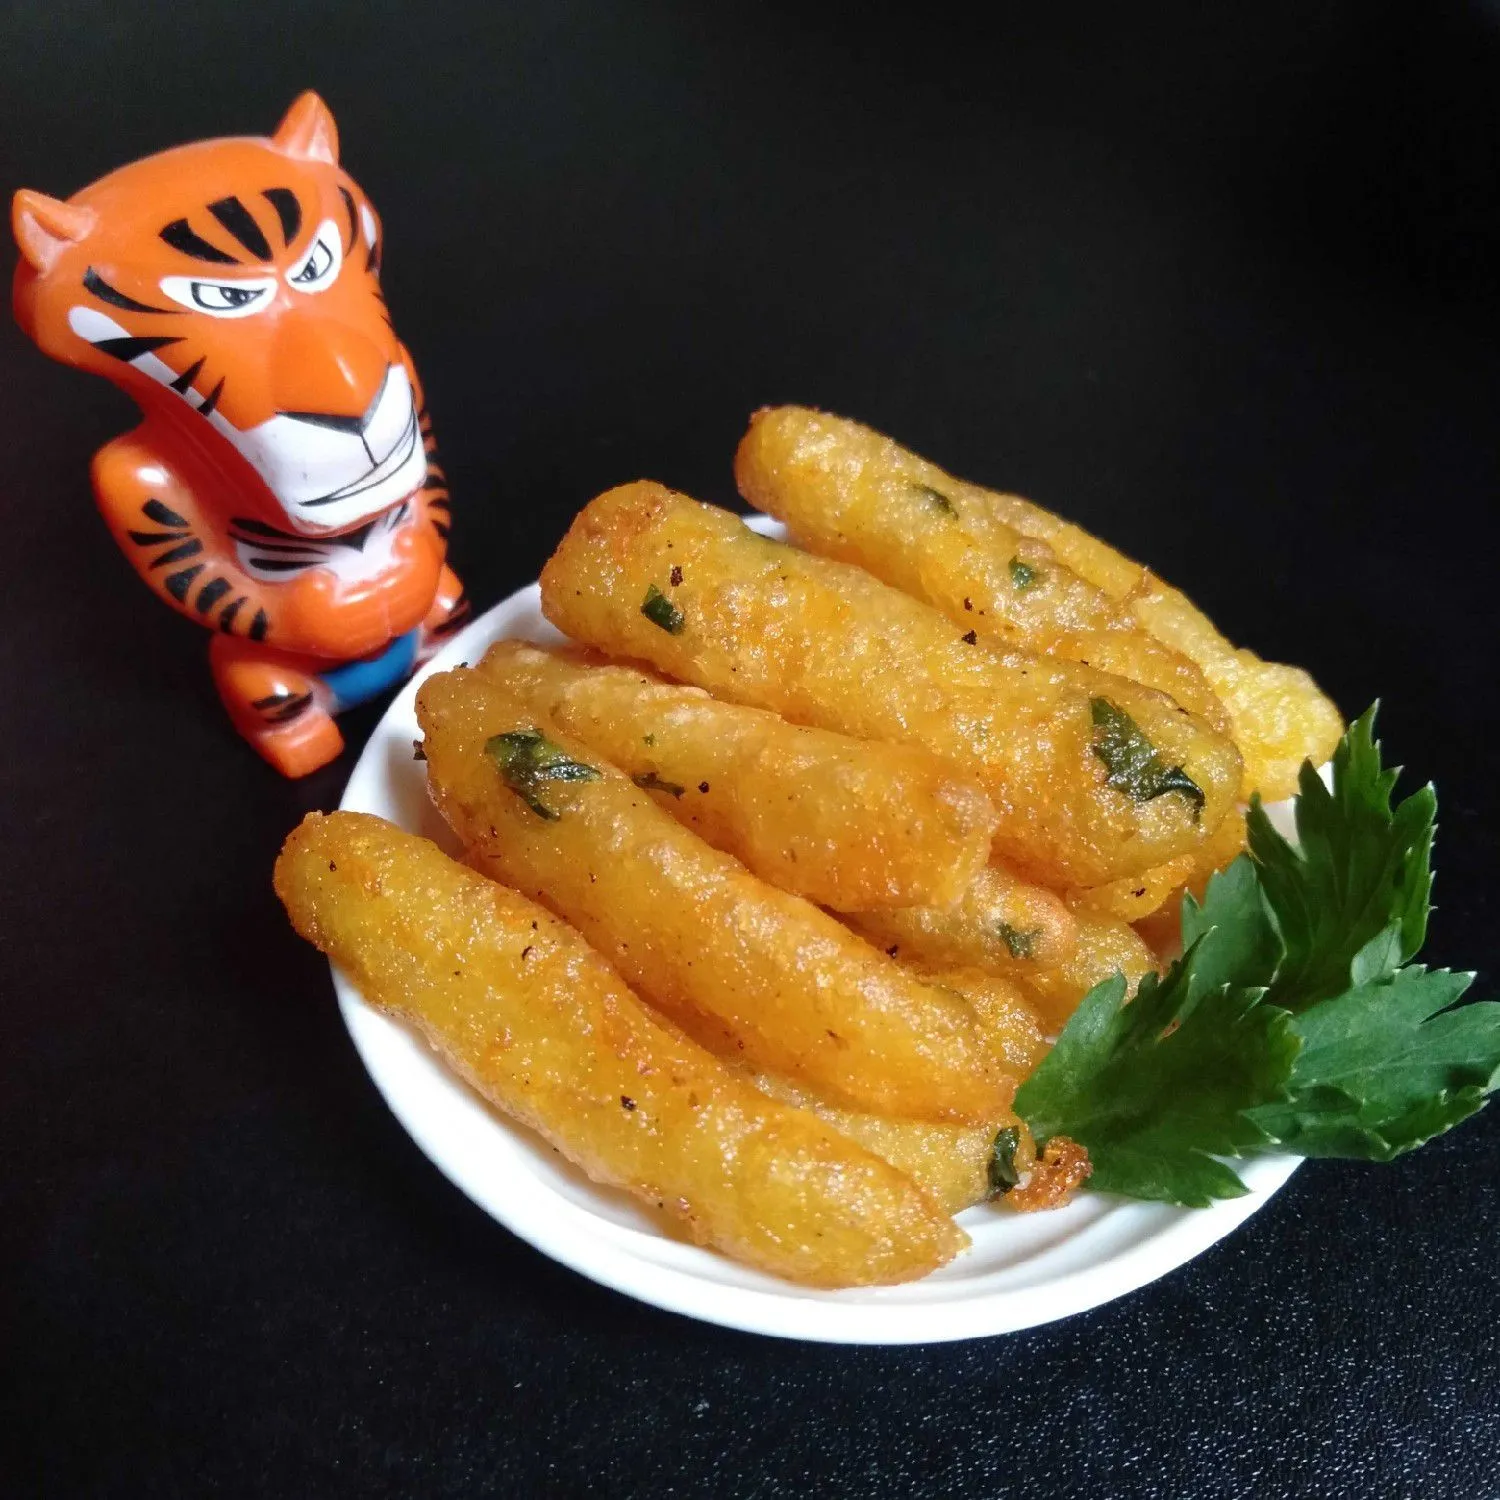 Potato Veggie Cheetos #JagoMasakMinggu3Periode3